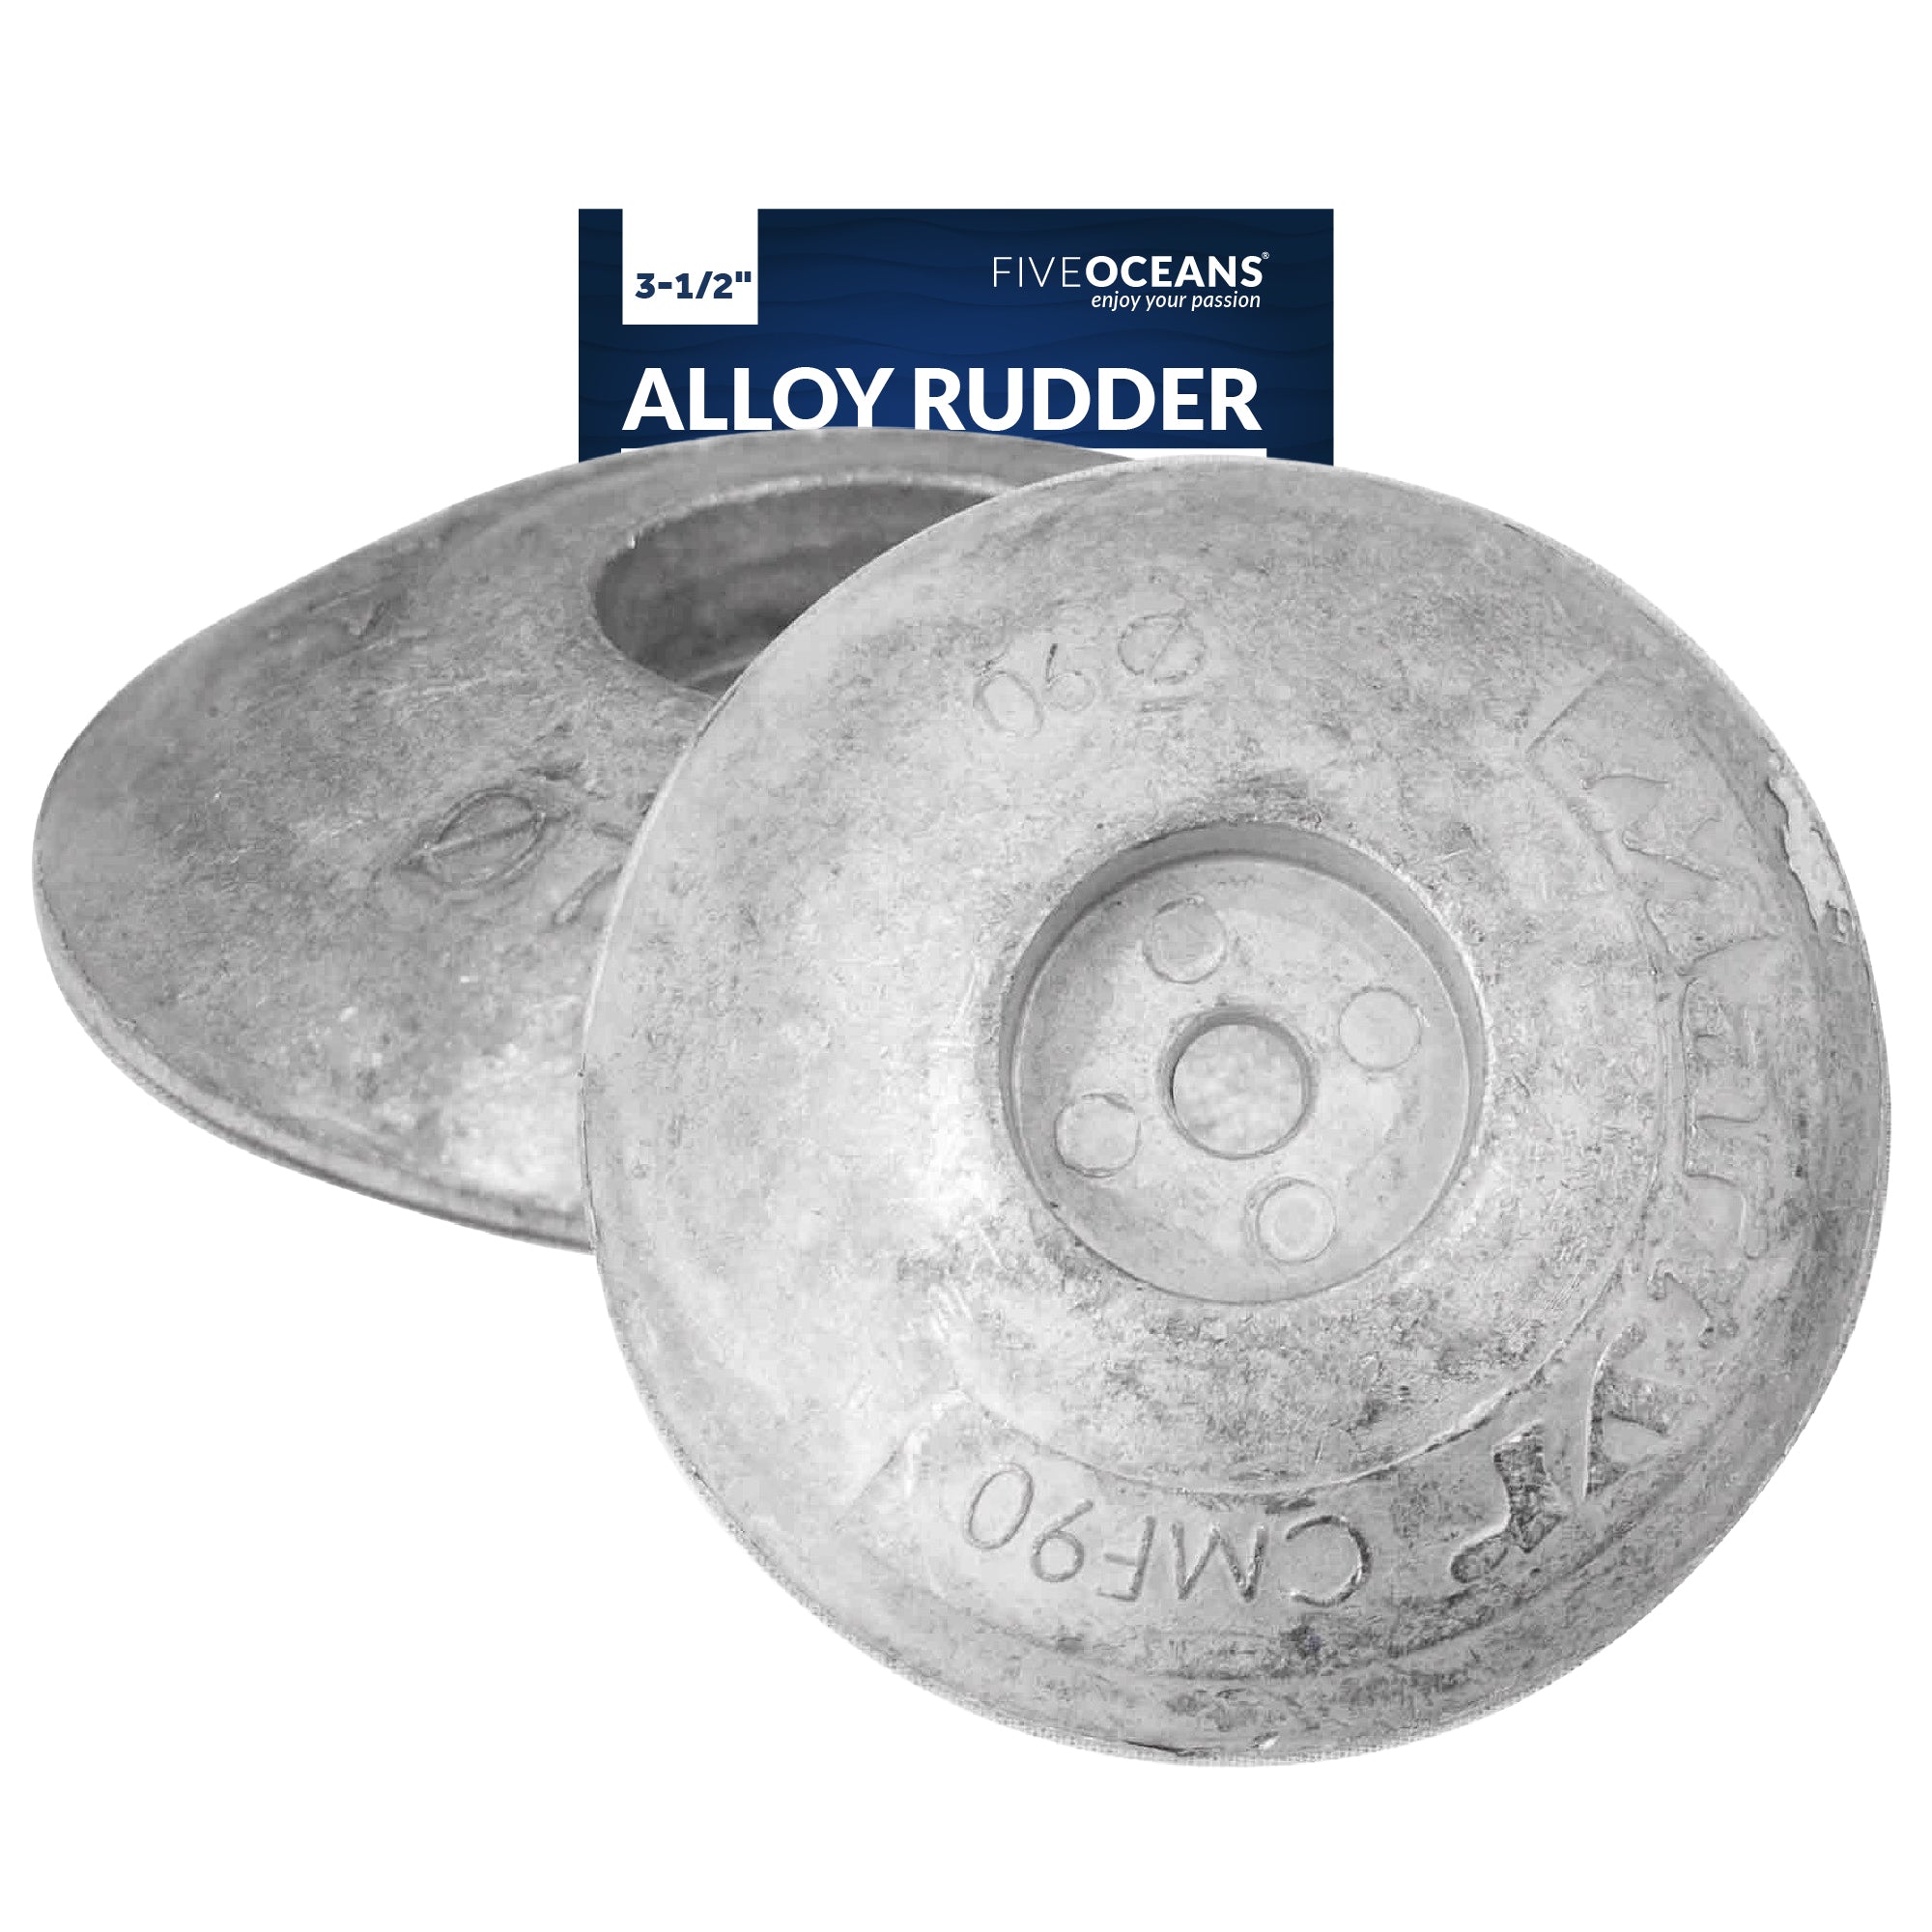 Alloy Rudder/Trim Tab Disc Anode, Aluminum, 3-1/2", 2-pack - FO4171-M2